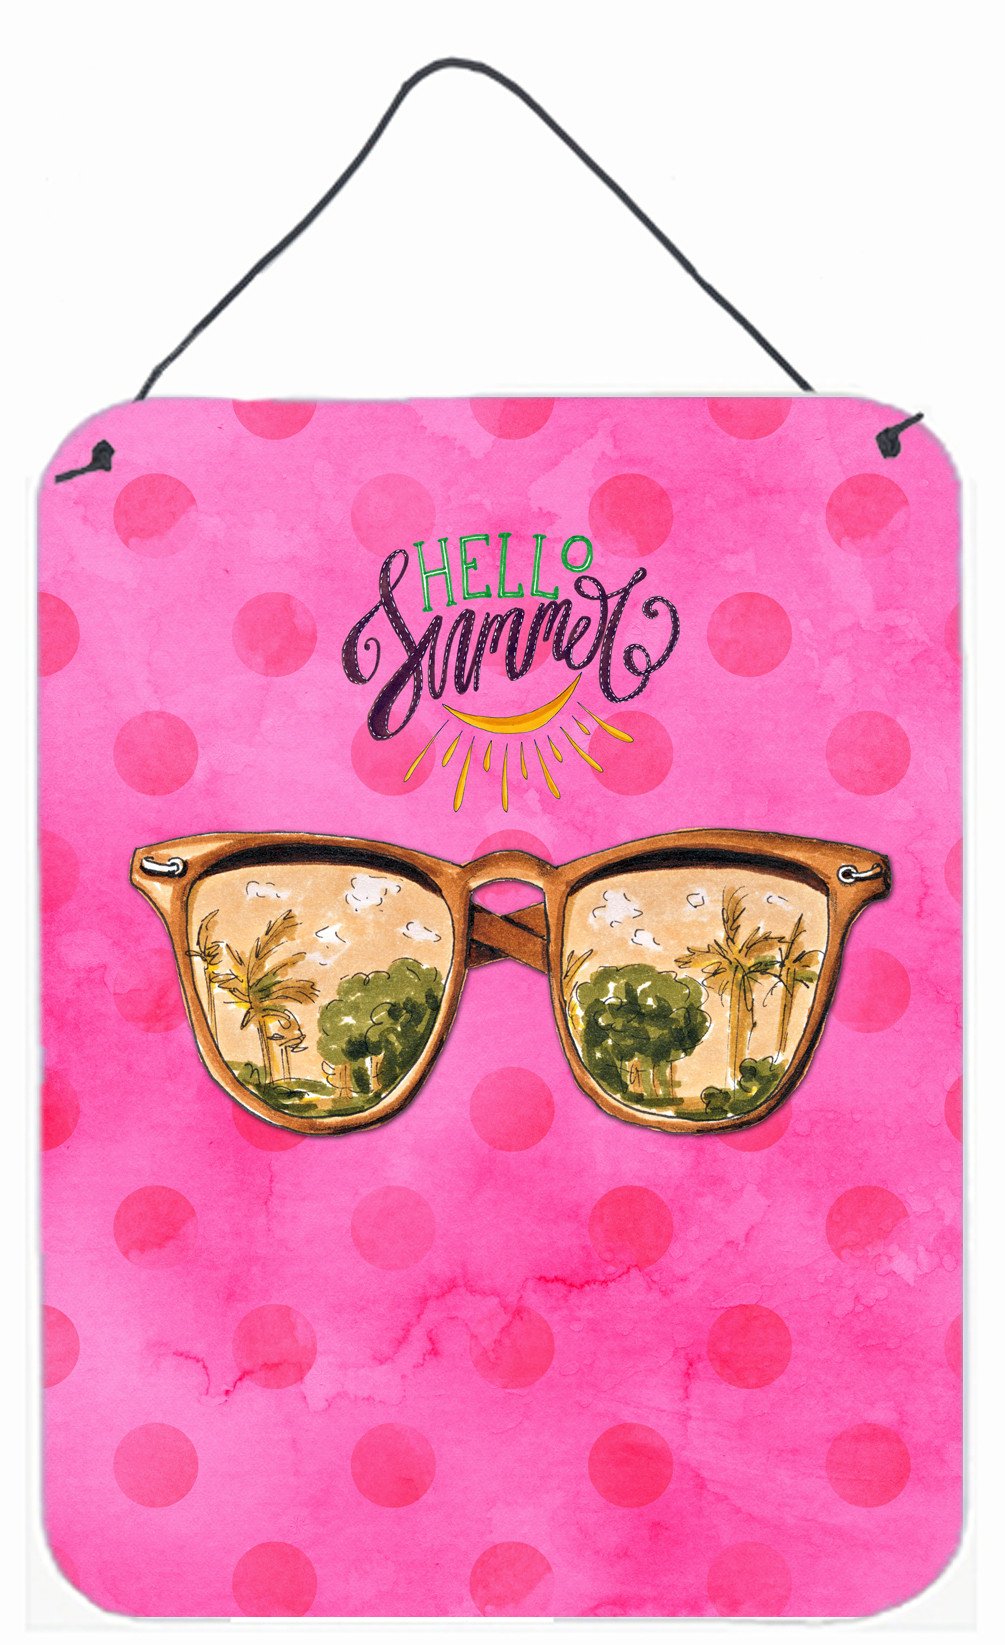 Beach Sunglasses Pink Polkadot Wall or Door Hanging Prints BB8209DS1216 by Caroline's Treasures